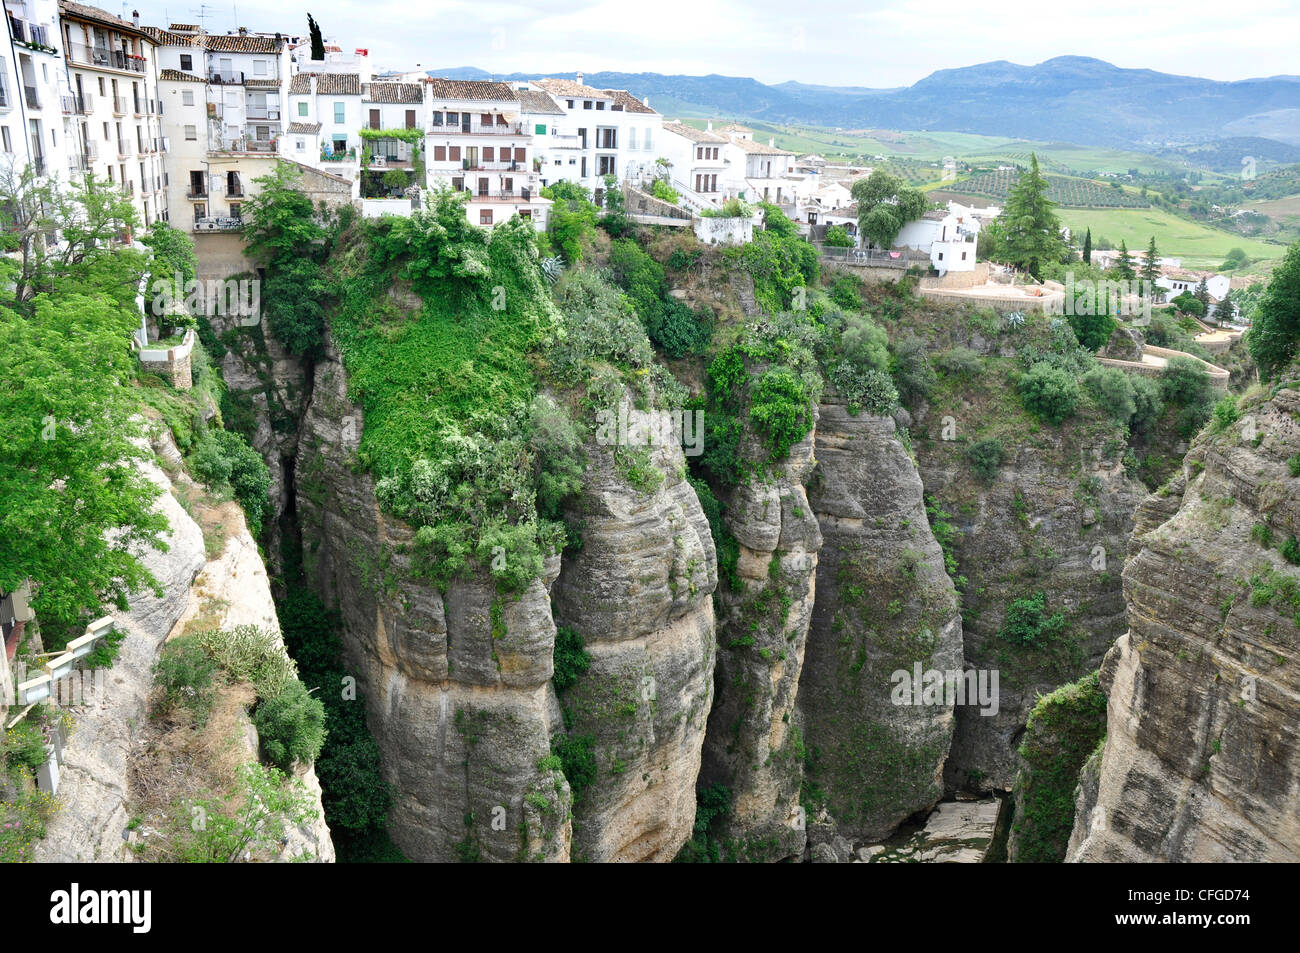 Spanien - Malaga Provinz - Ronda - Altstadt über die El Tajo Schlucht des Rio Gudalevin - Kulisse Serrania de Ronda Berg Stockfoto